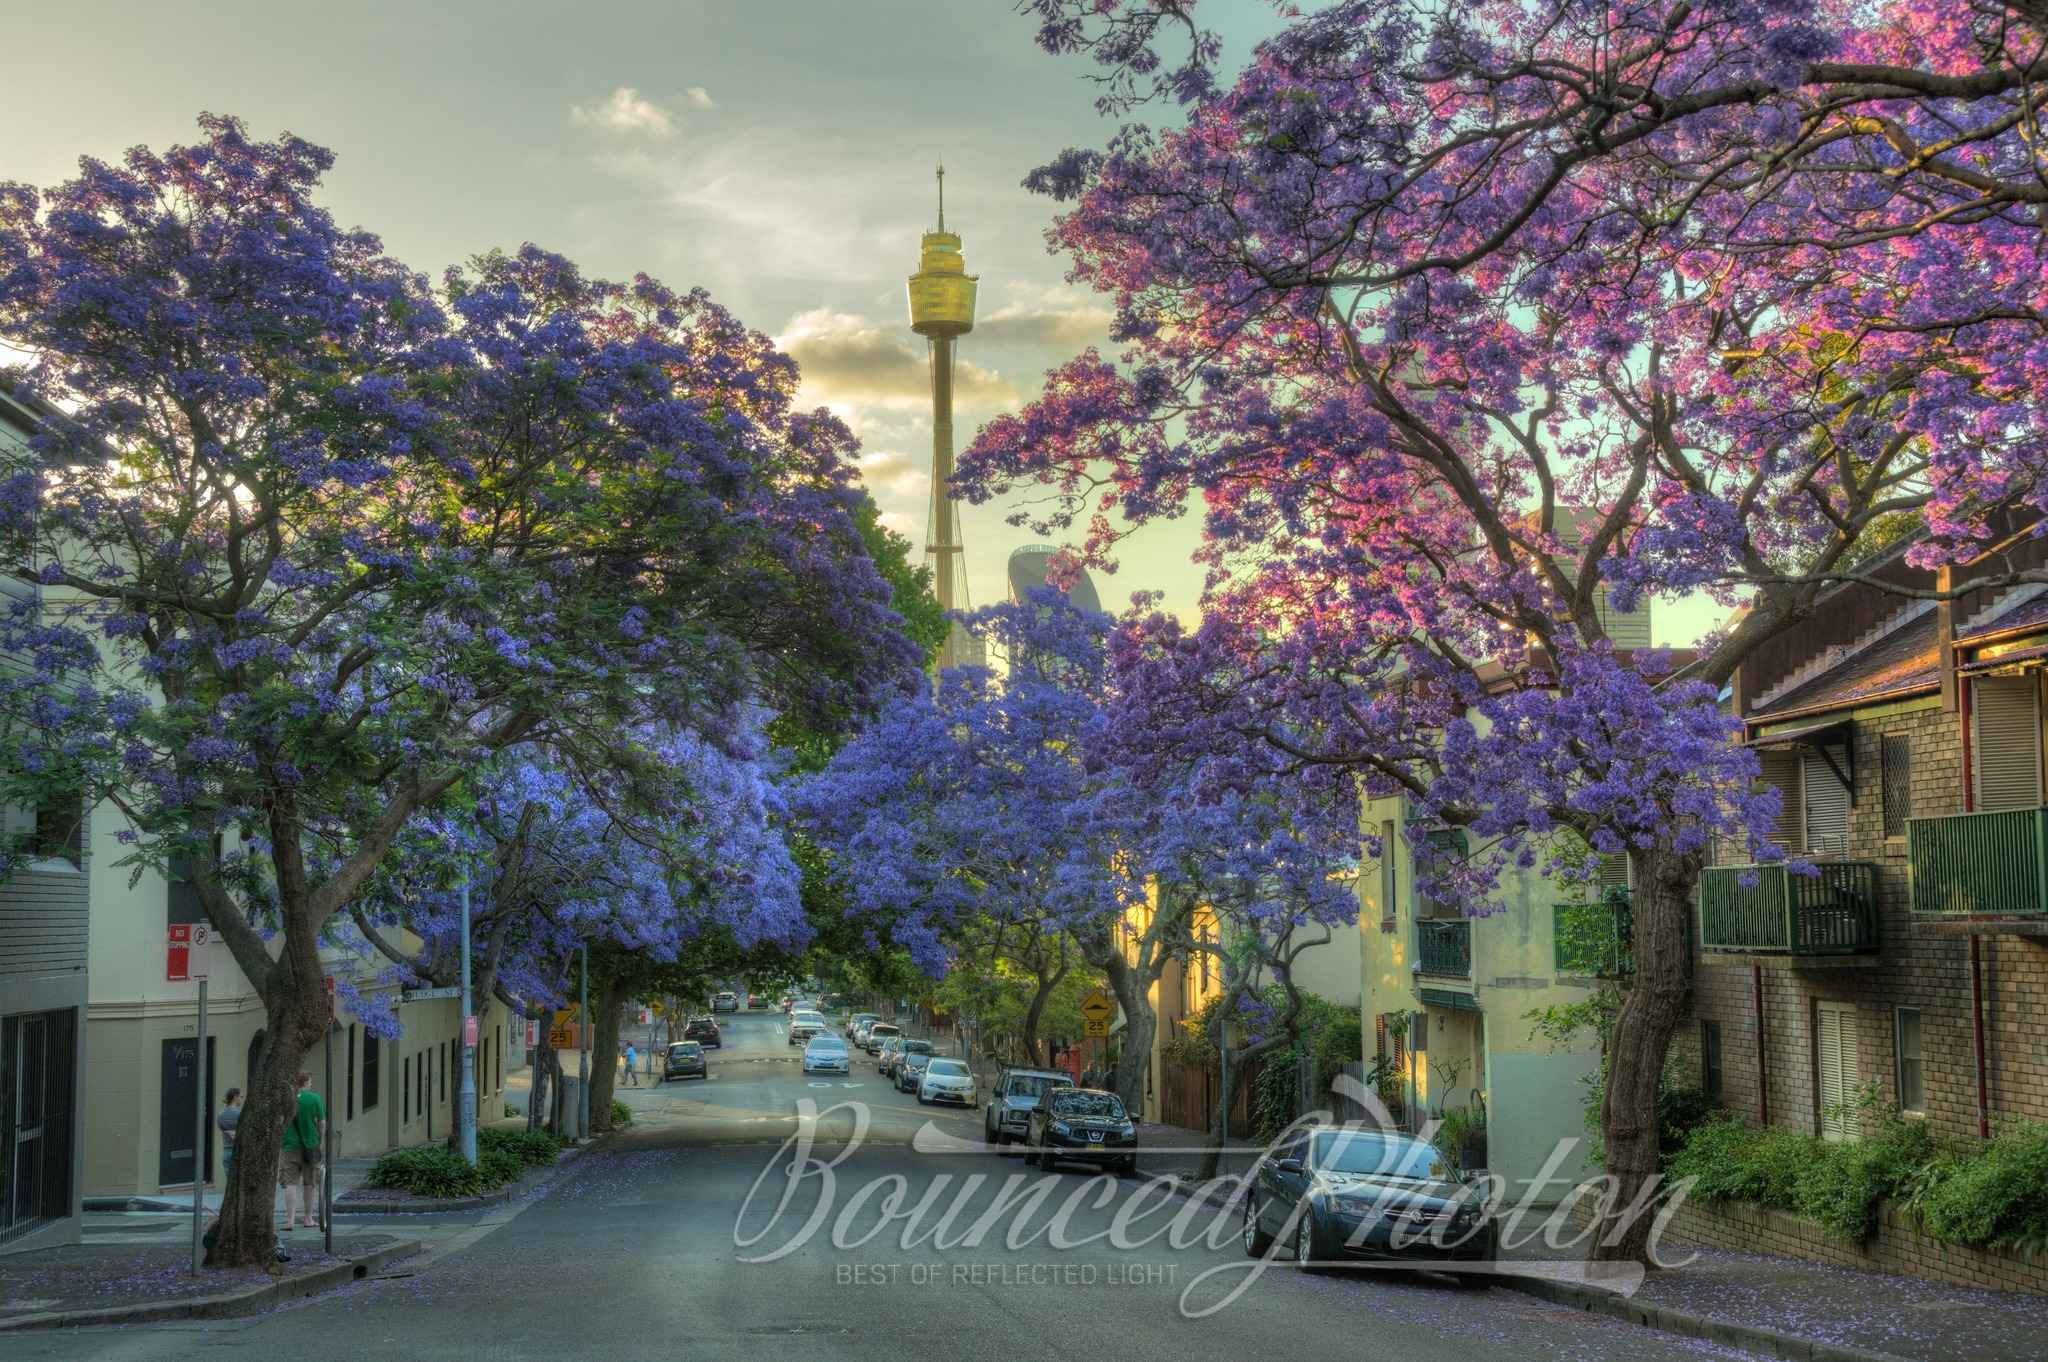 Jacarandas in Bloom on Cathedral Street, Woolloomooloo, Sydney, Australia